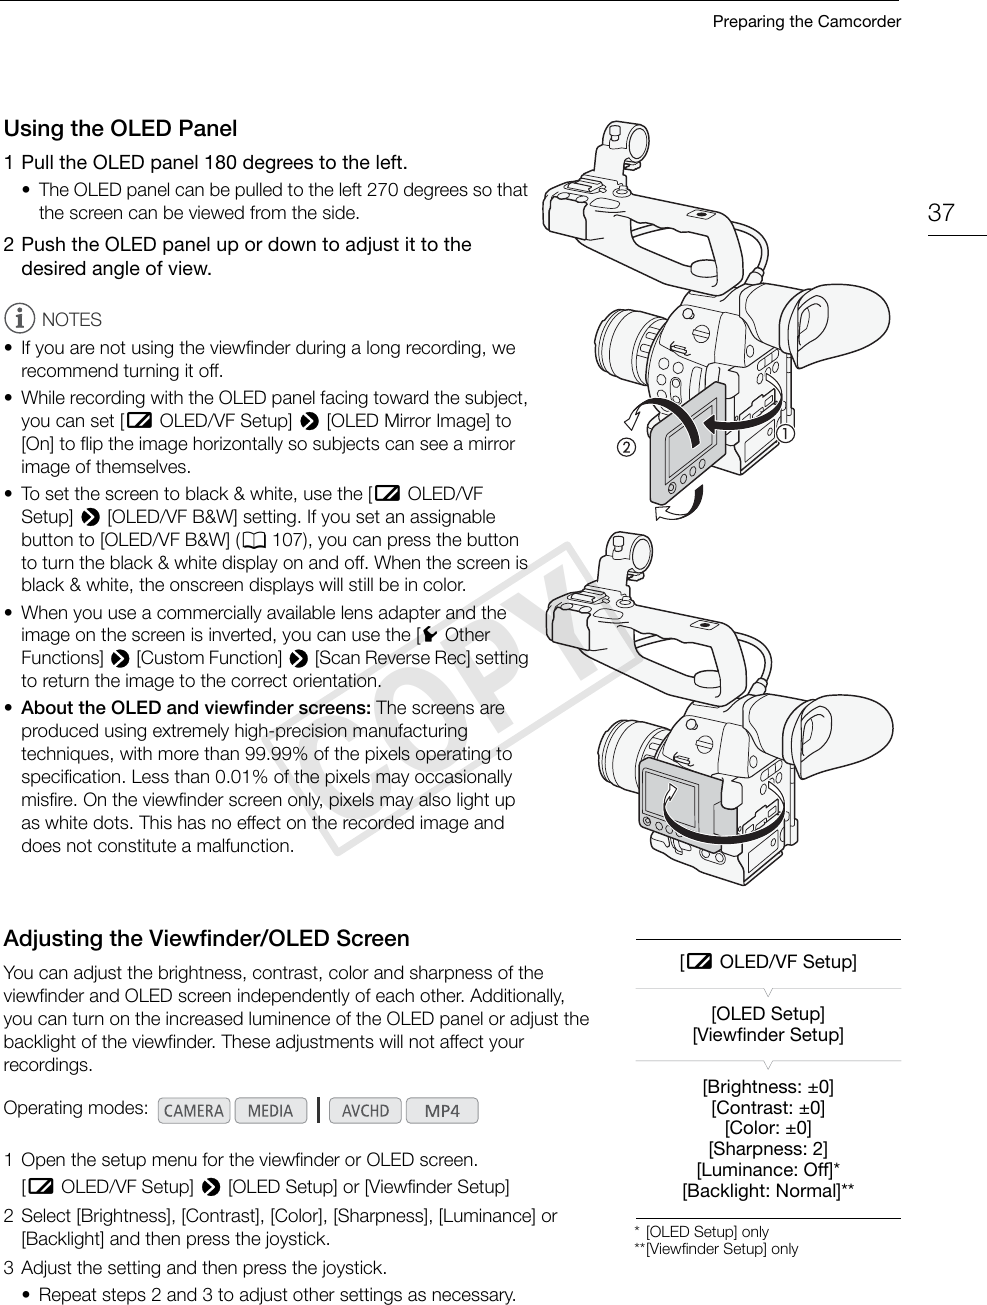 Canon Eos C100 Mark Ii Instruction Manual